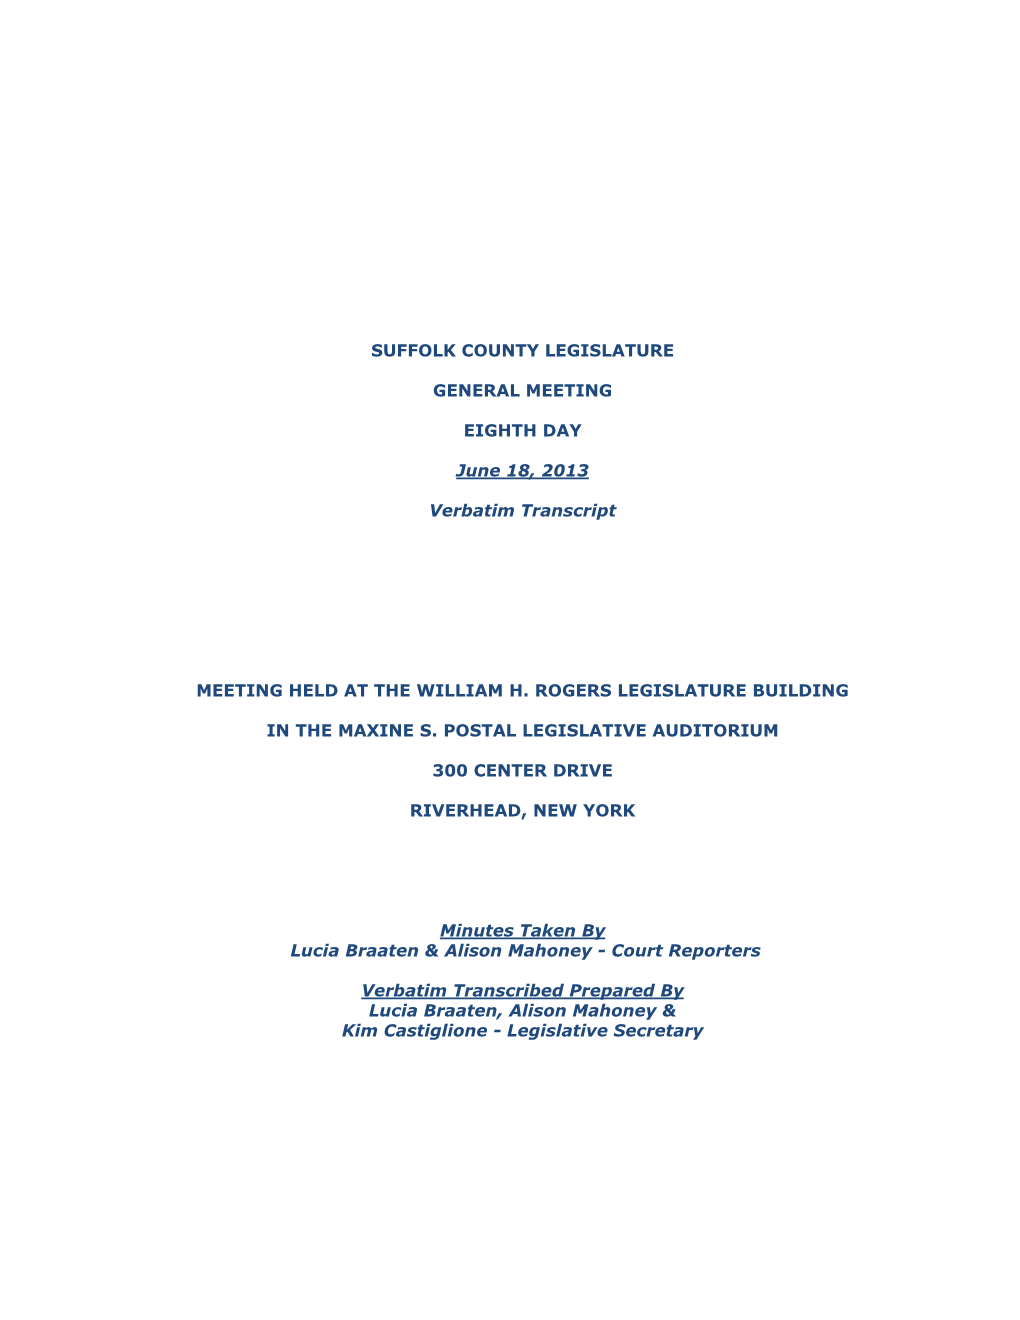 Suffolk County Legislature General Meeting Eighth Day